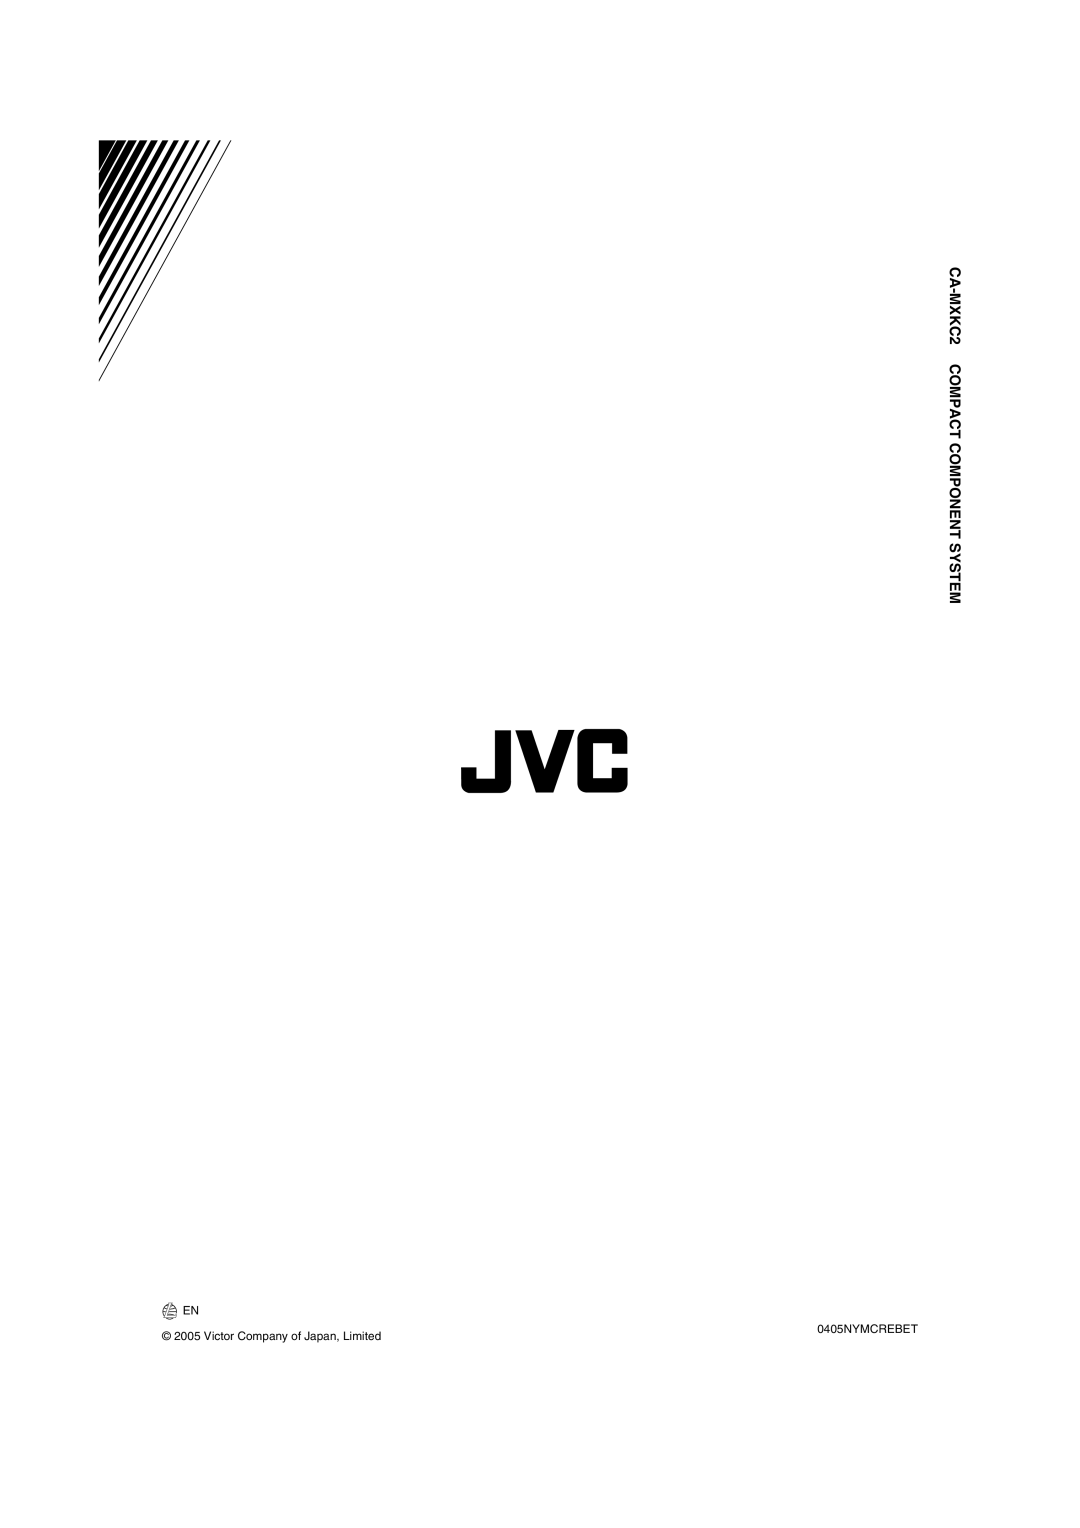 JVC LVT1346-002A manual CA-MXKC2 Compact Component System, 0405NYMCREBET 